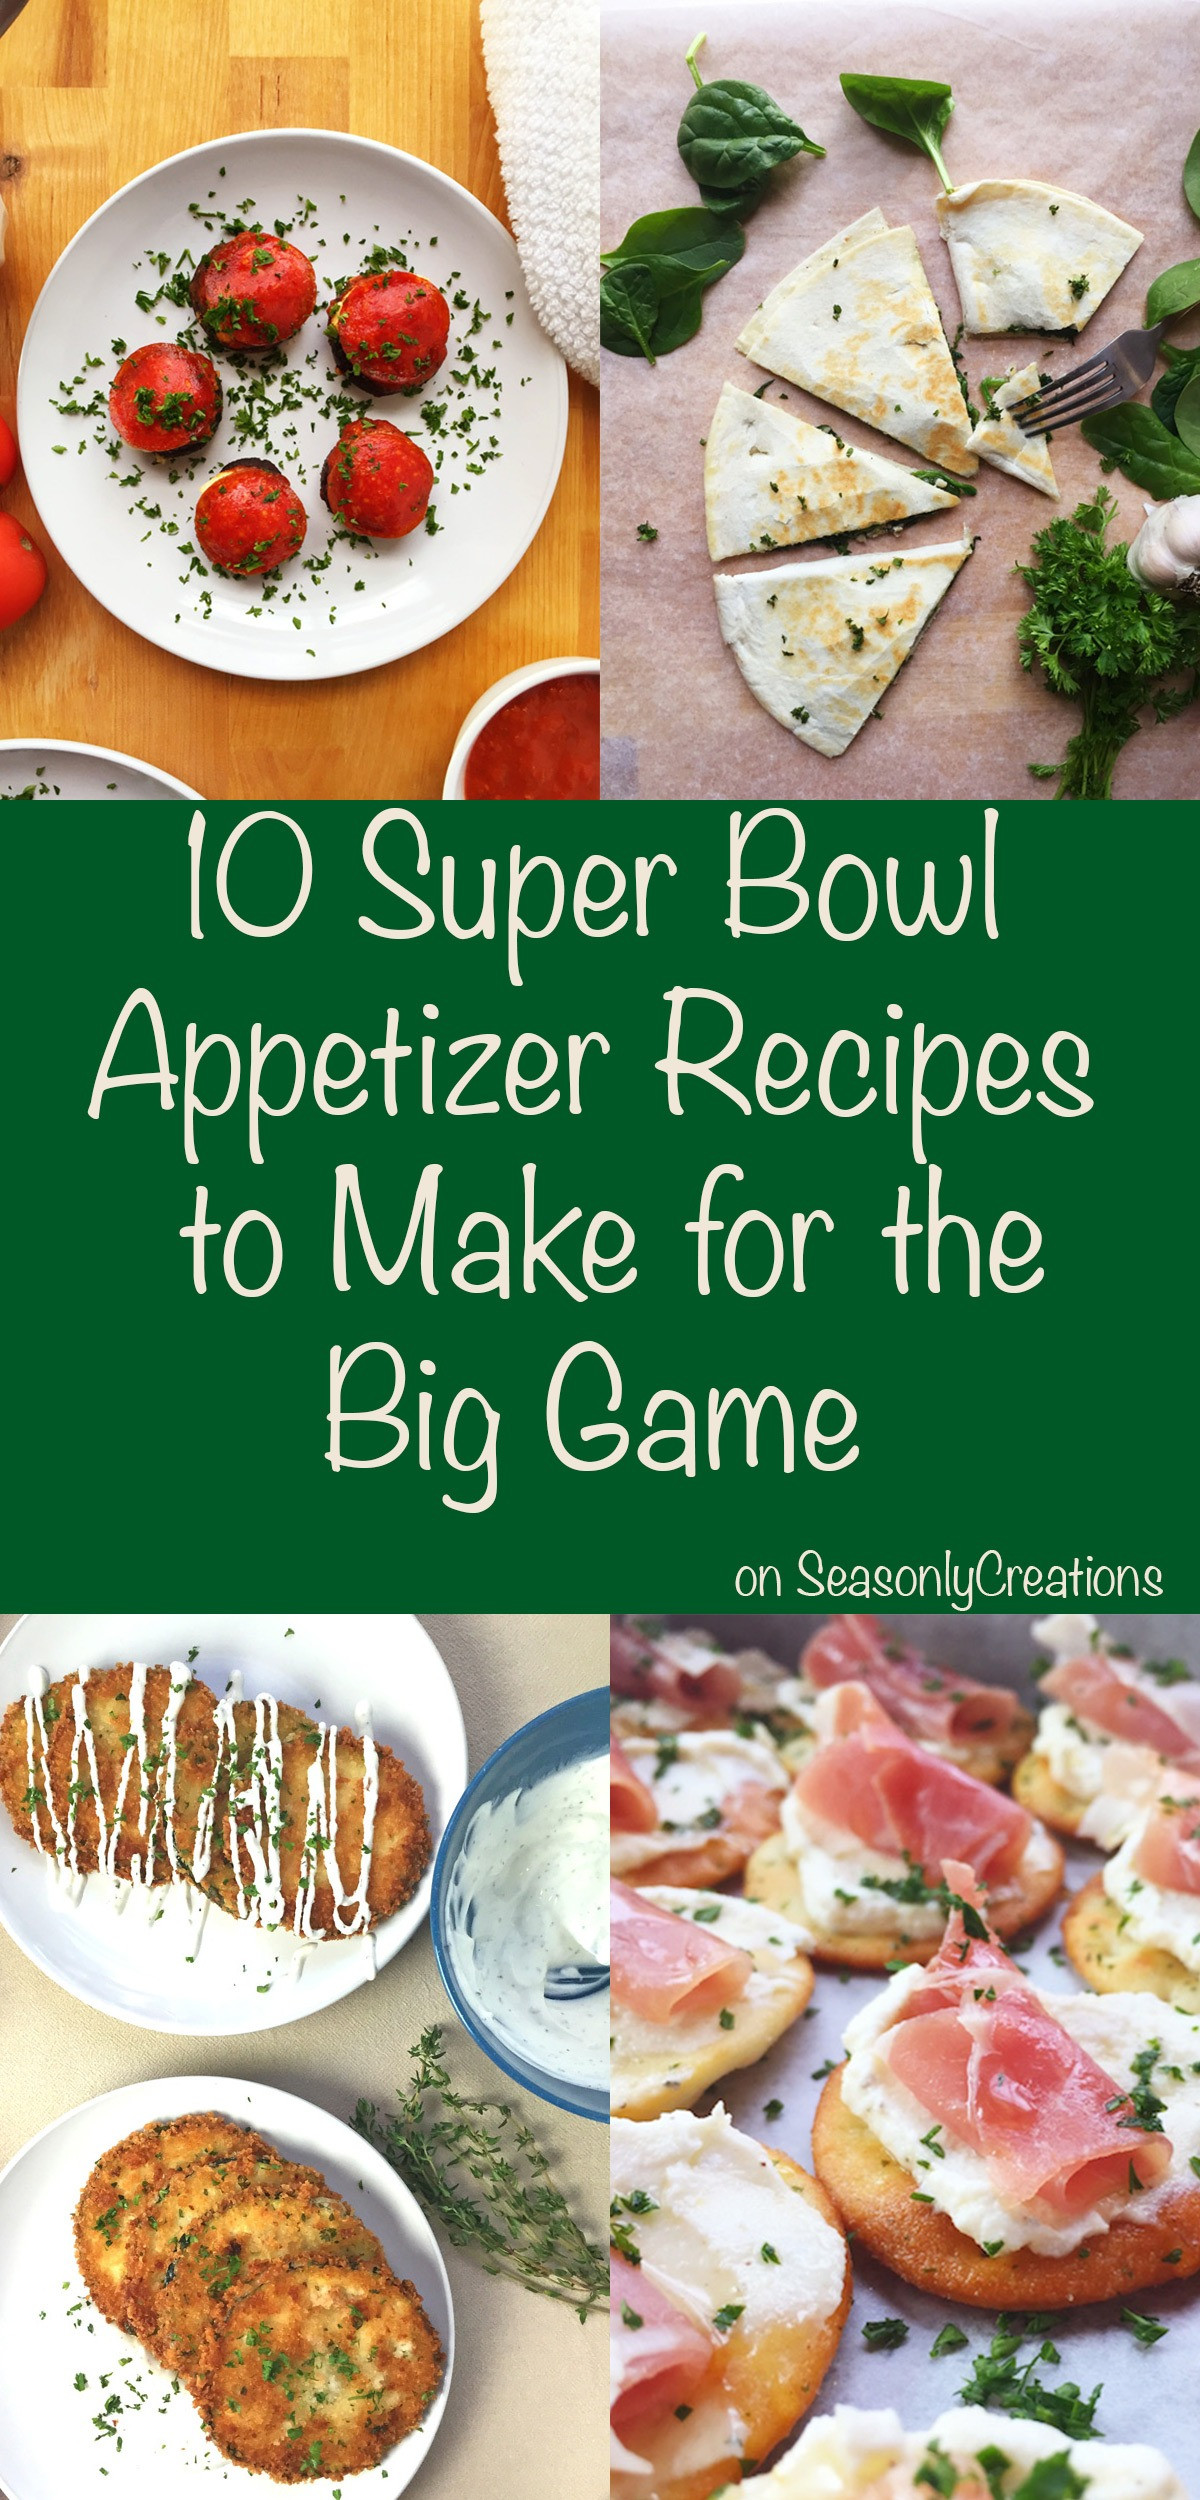 Super Bowl Recipes Pinterest
 10 Super Bowl Appetizer Recipes to Make for the Big Game